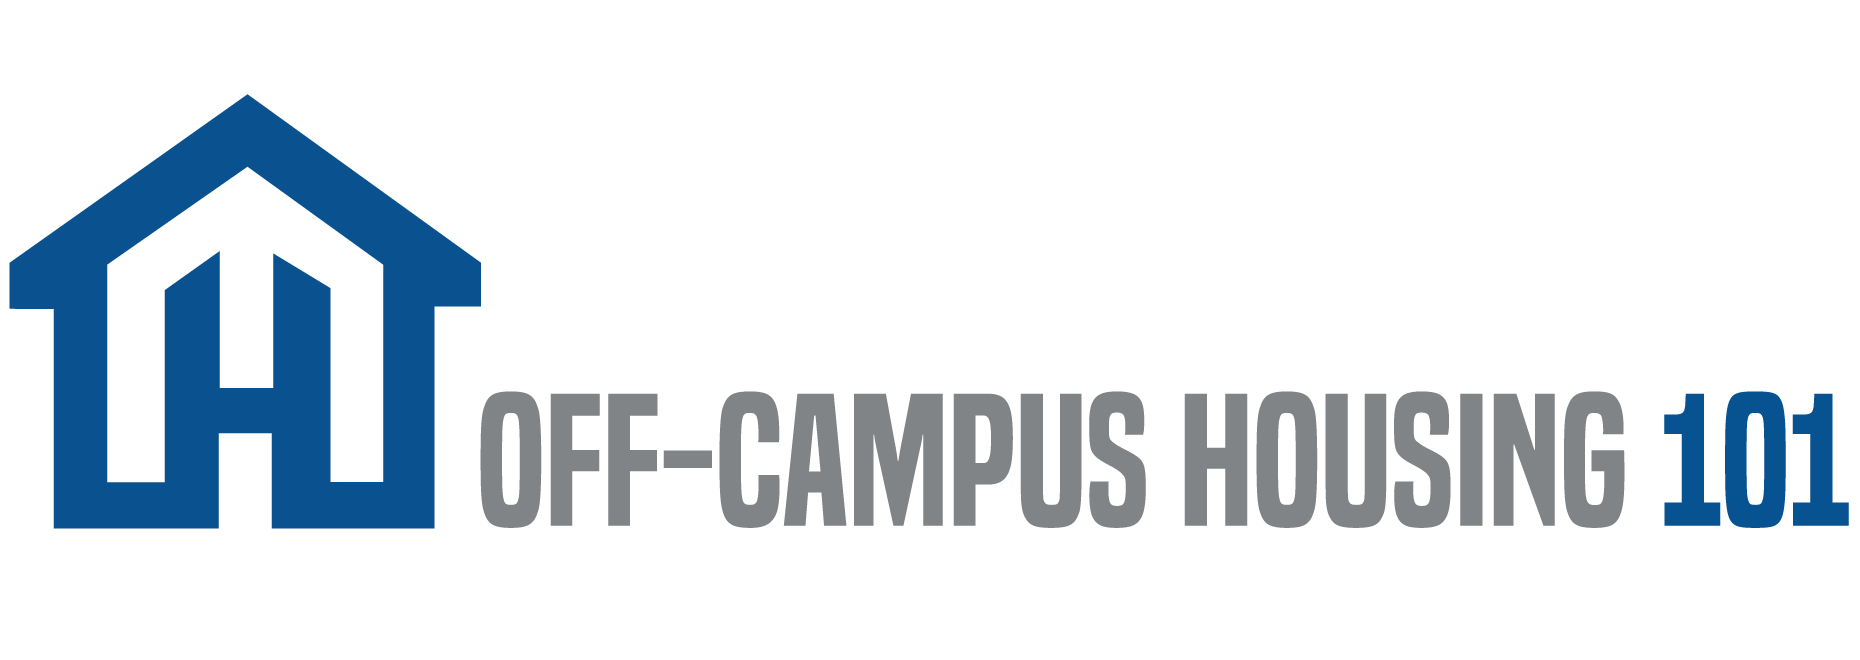 Off campus housing 101 logo